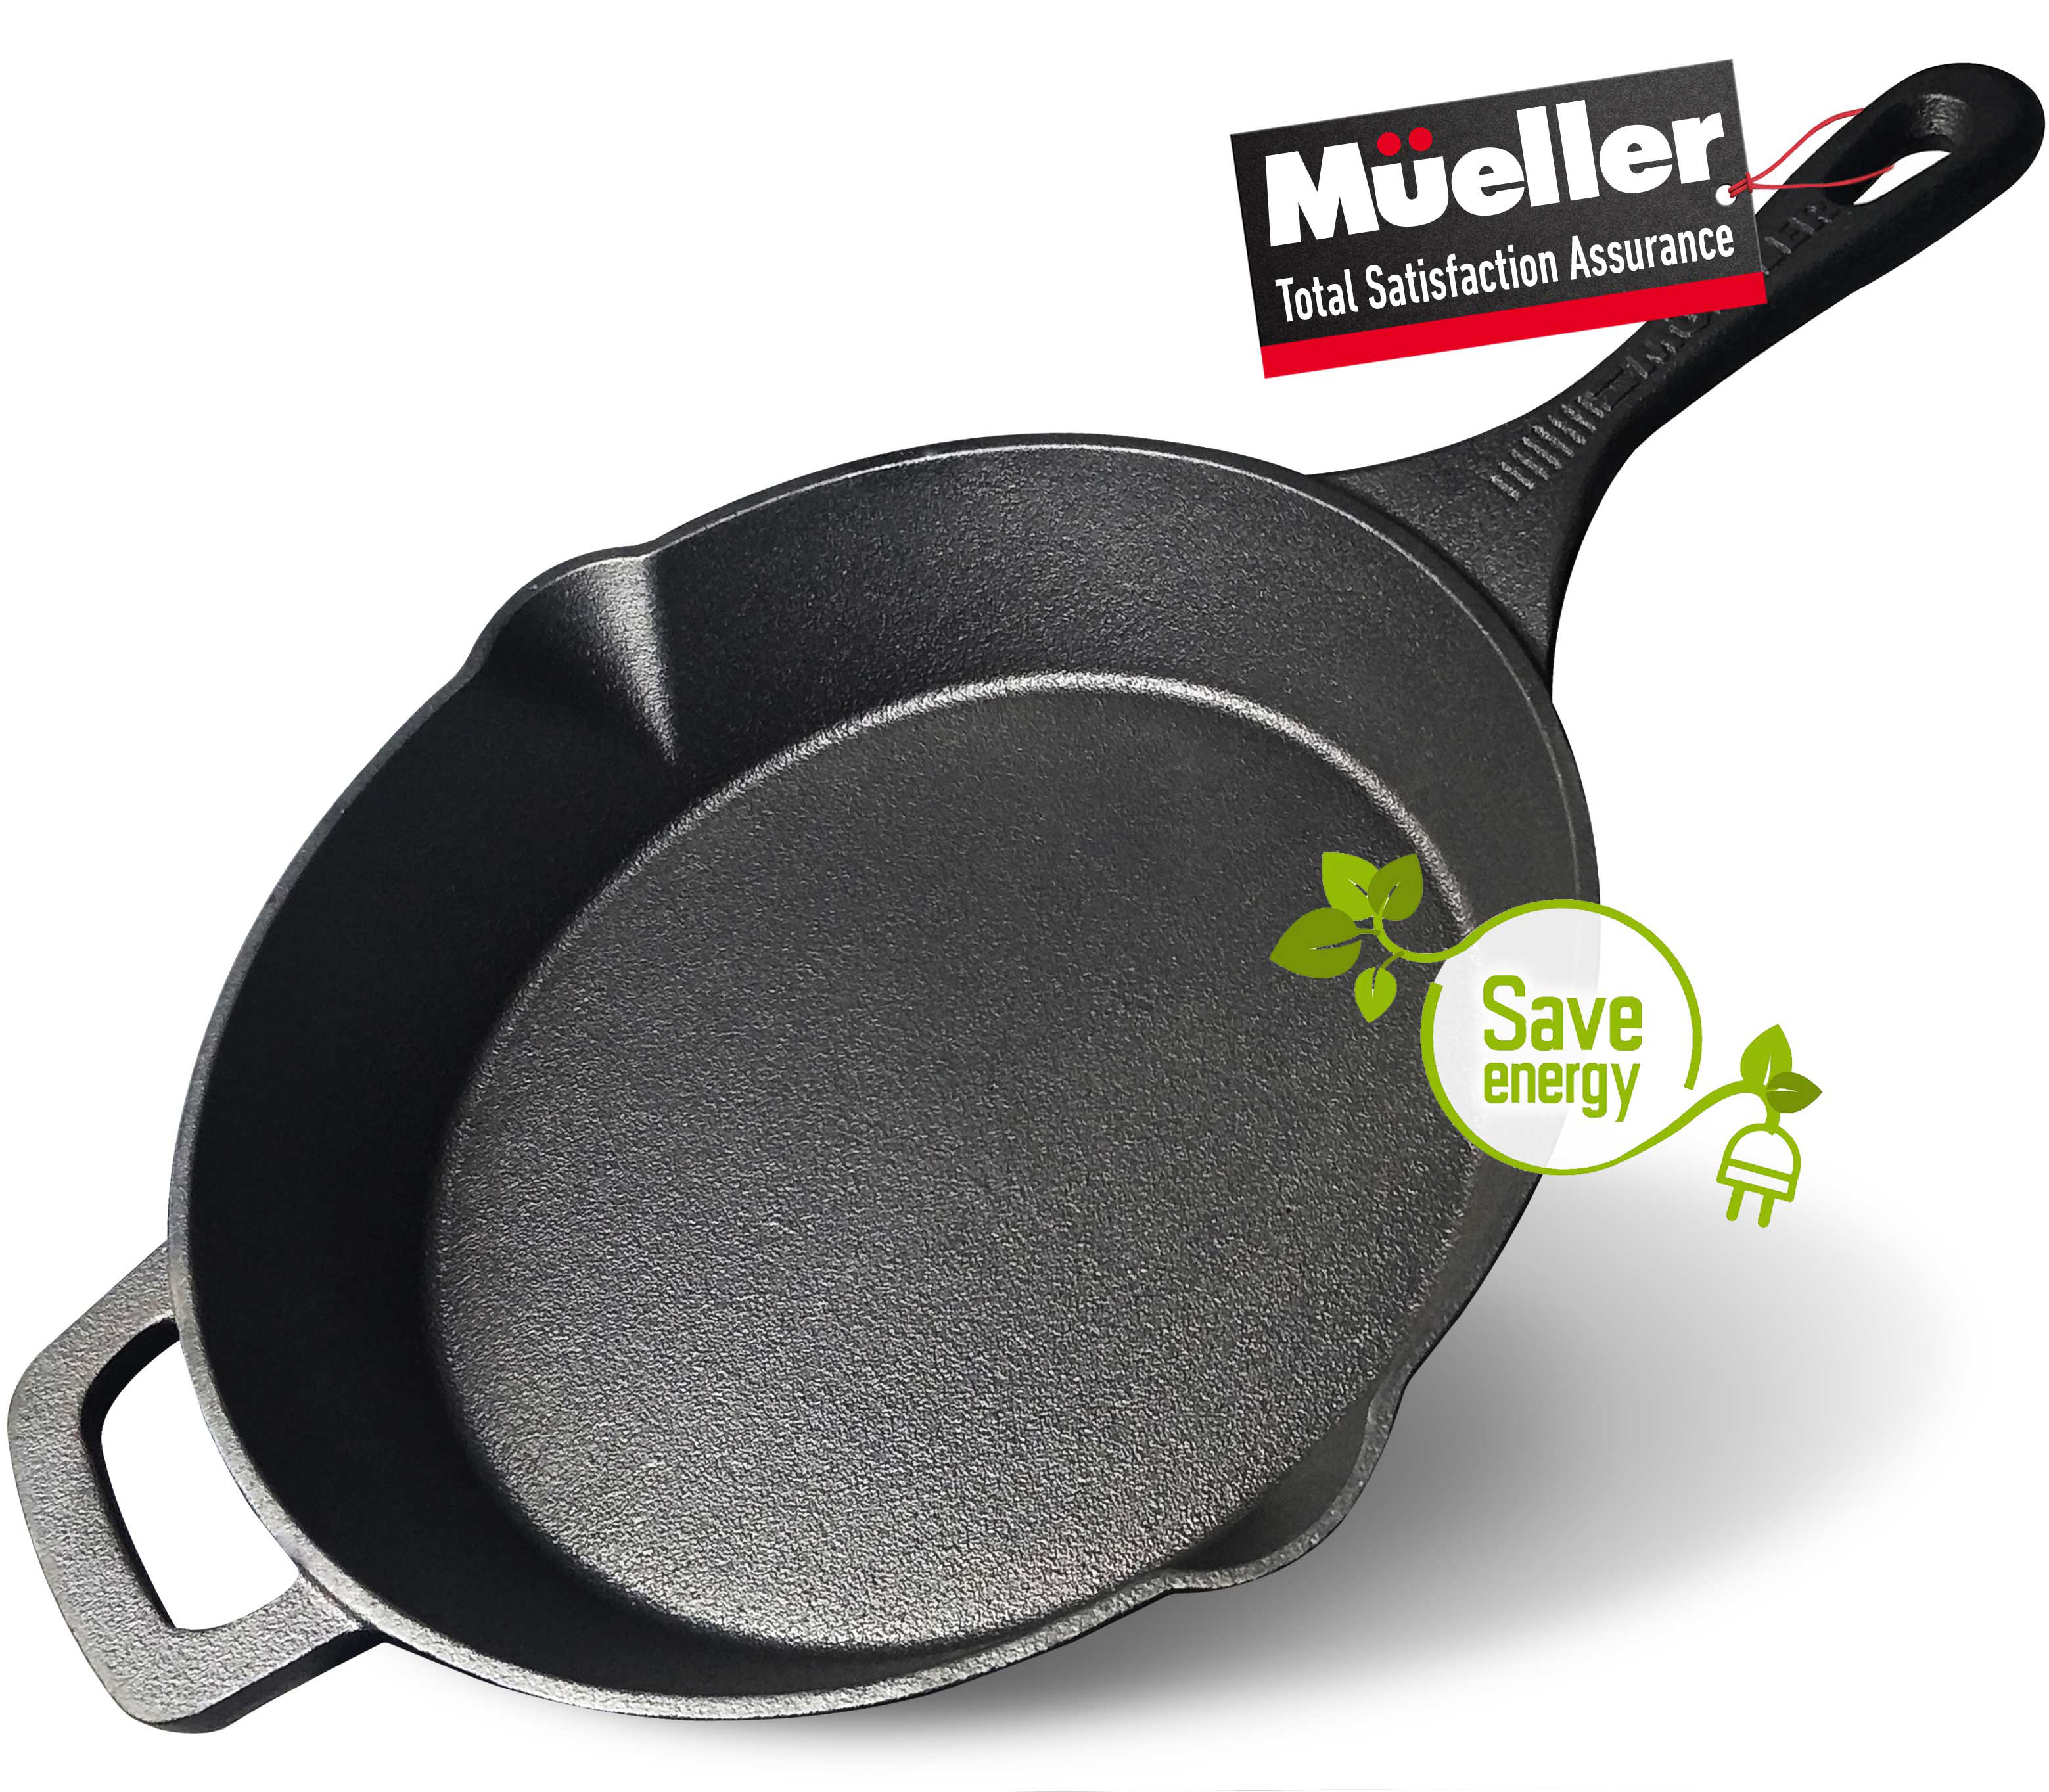 mueller home Mueller DuraCast 6 Quart Enameled Cast Iron Dutch Oven Pot  with Lid, Heavy-Duty